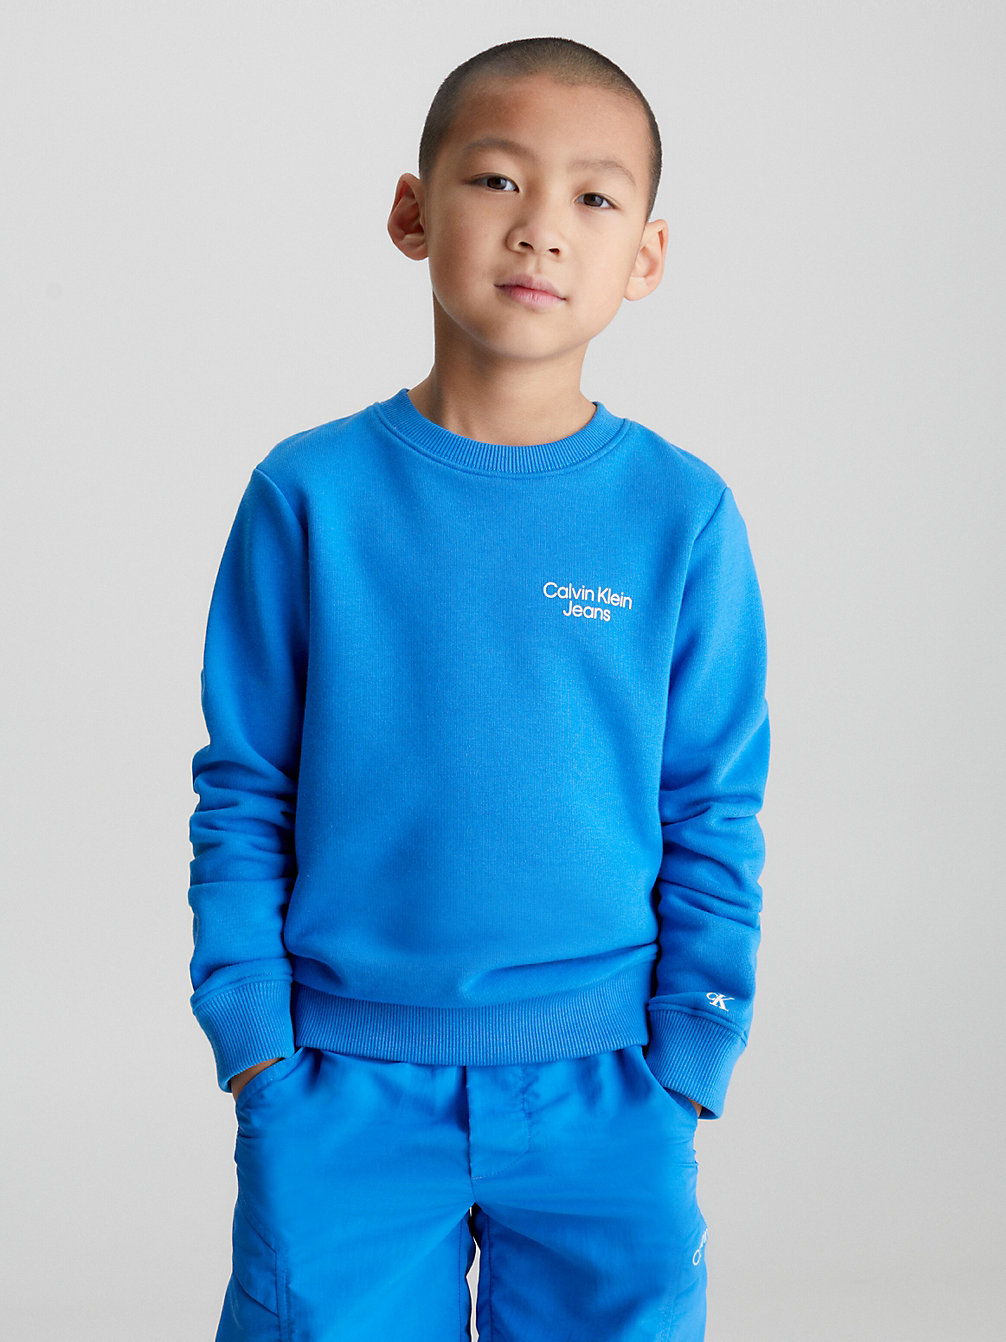 CORRIB RIVER BLUE Organic Cotton Terry Sweatshirt undefined boys Calvin Klein